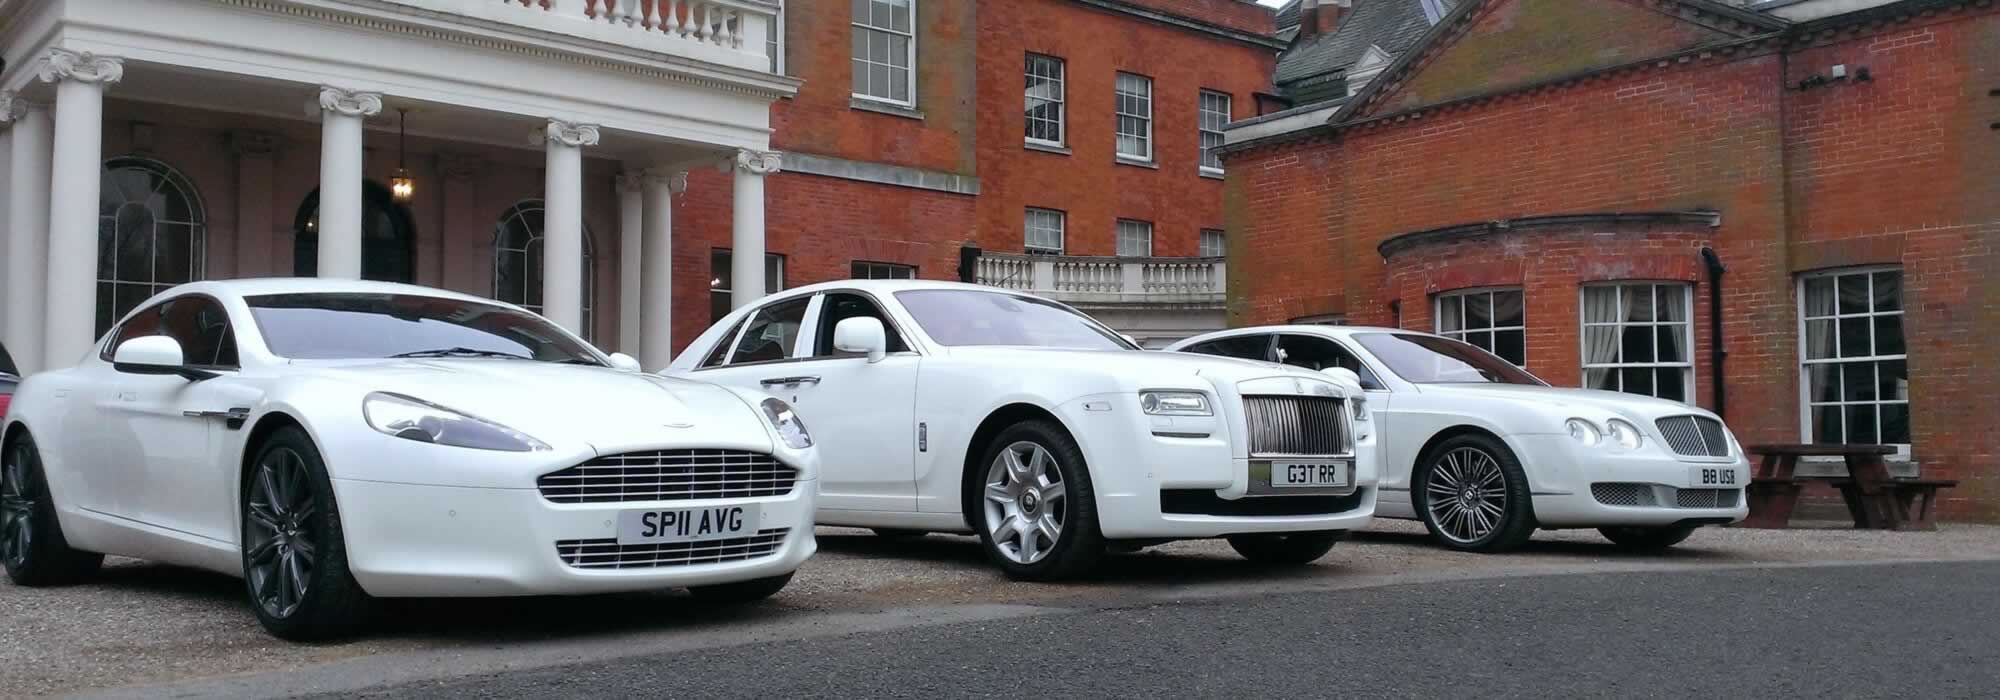 Hire Premium Wedding Car In London 3